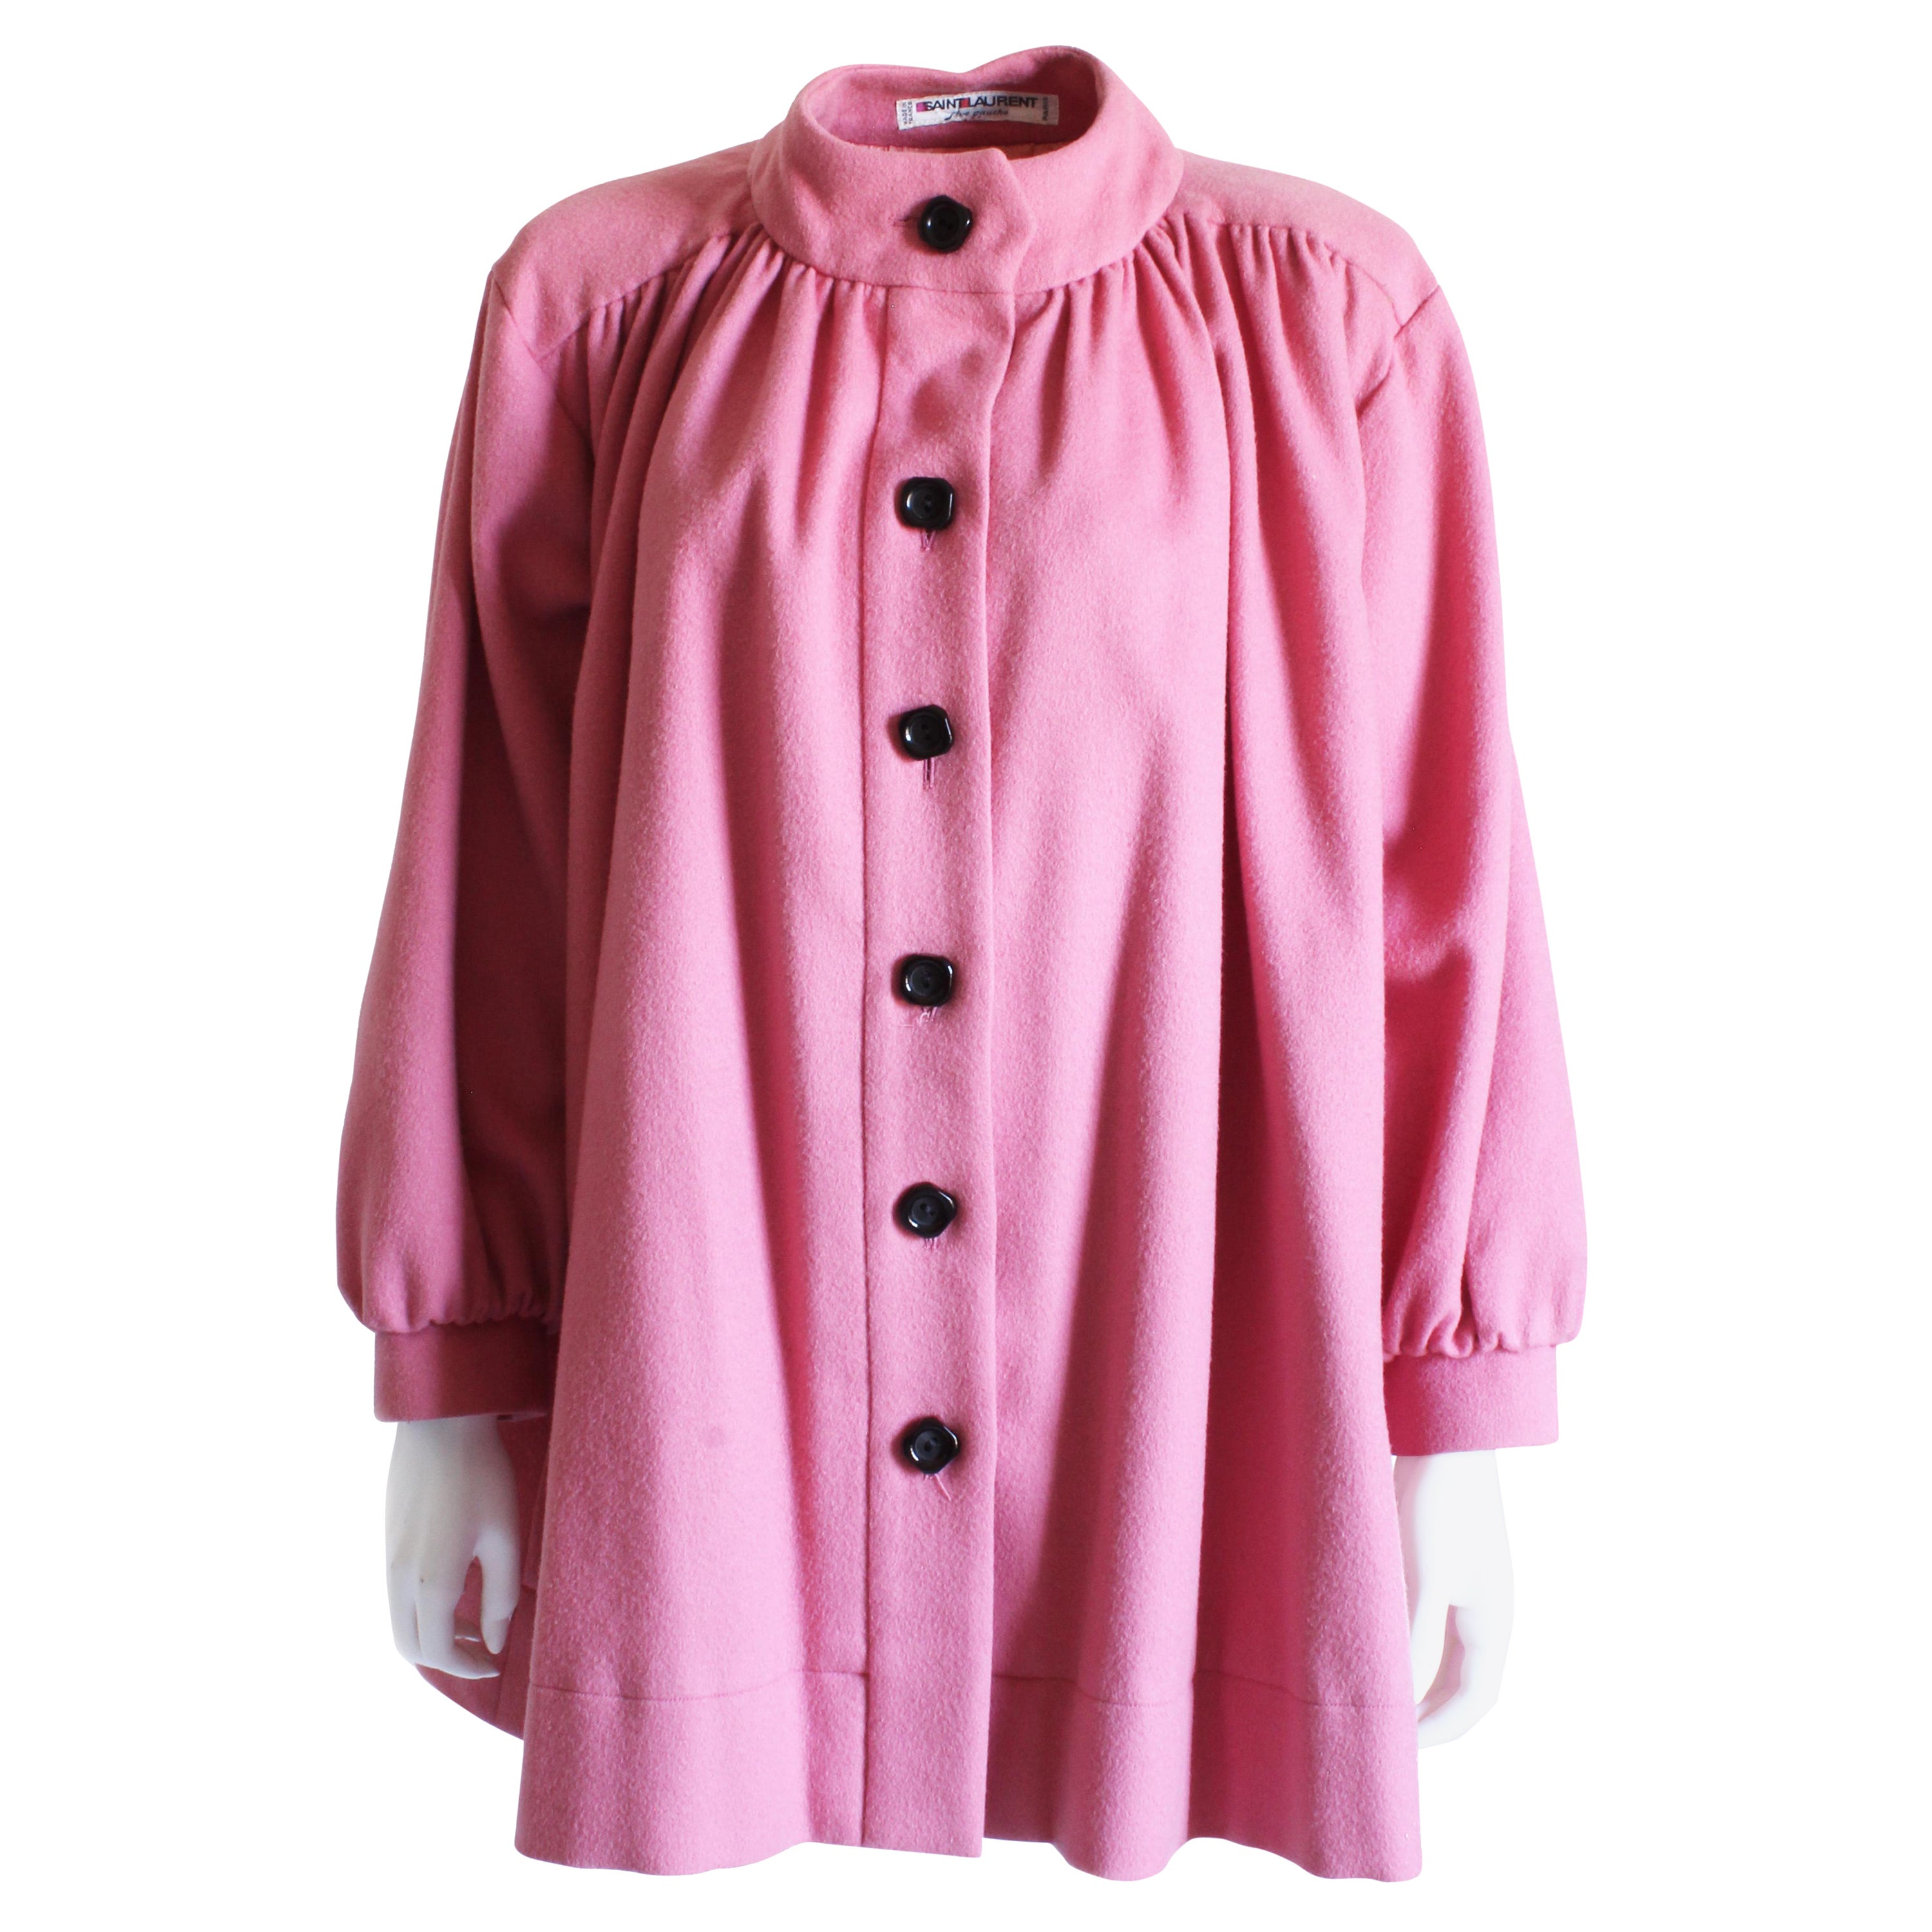 Yves Saint Laurent Jacket Swing Coat Pink Wool Vintage Size 34